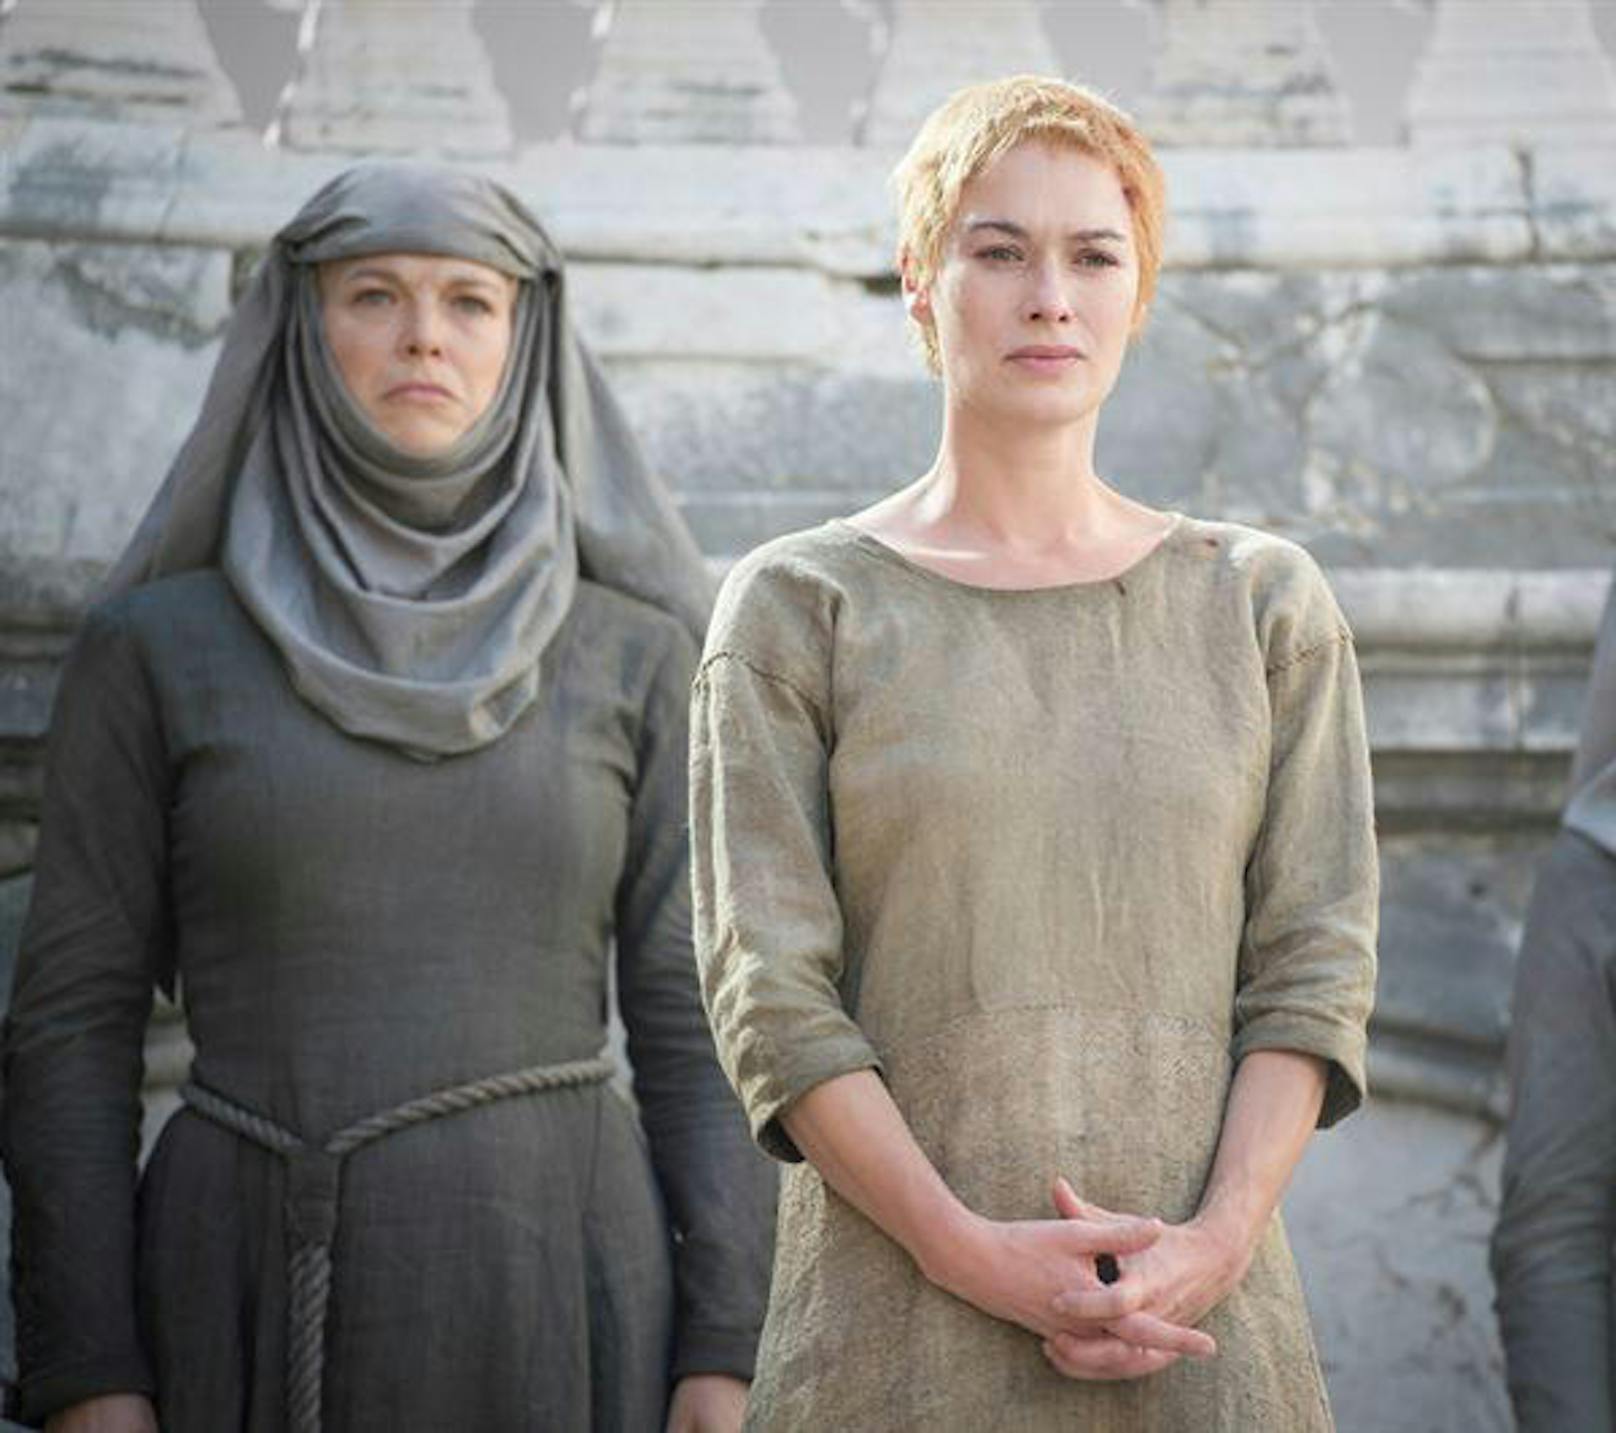 Lena Headey als Cersei Lannister in "Game of Thrones"